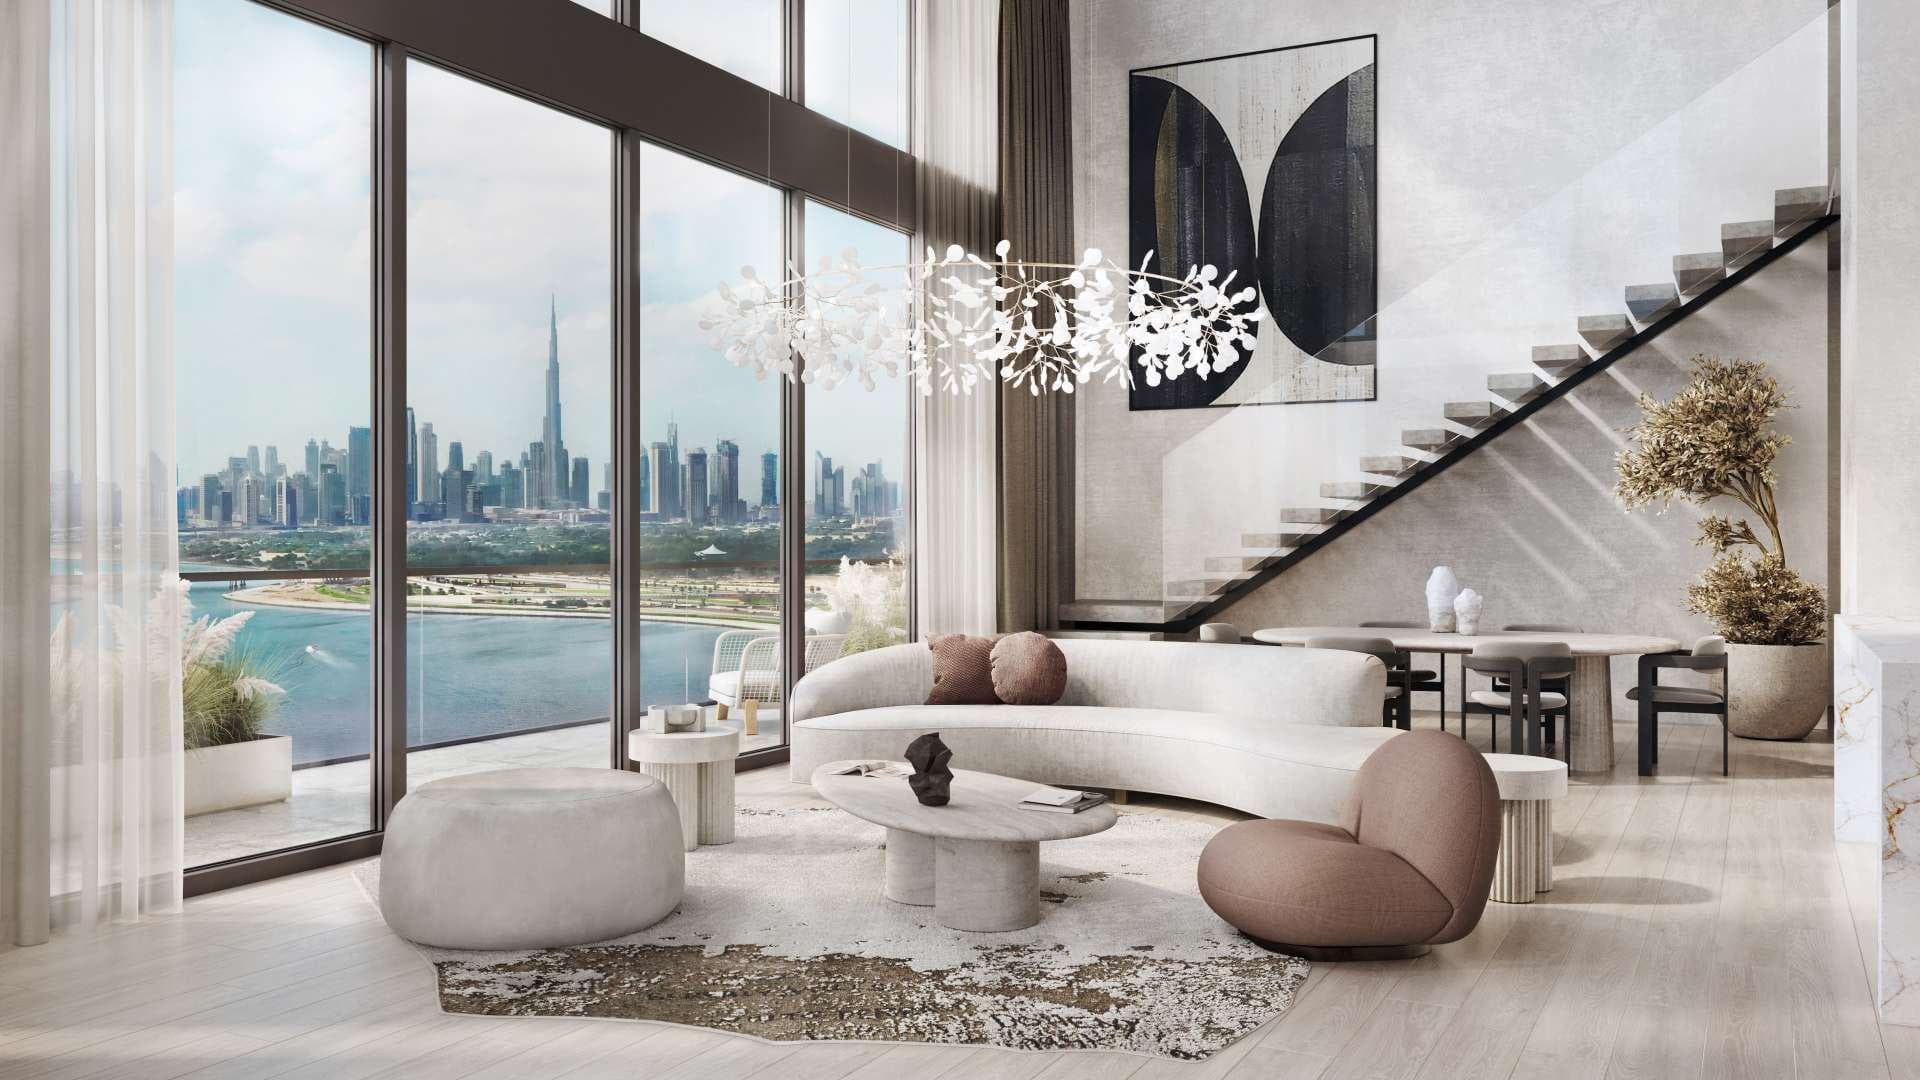 2 Bedroom Apartment For Sale Kempinski Residences The Creek Dubai Lp15628 1ac0a1a41b3c2e.jpg